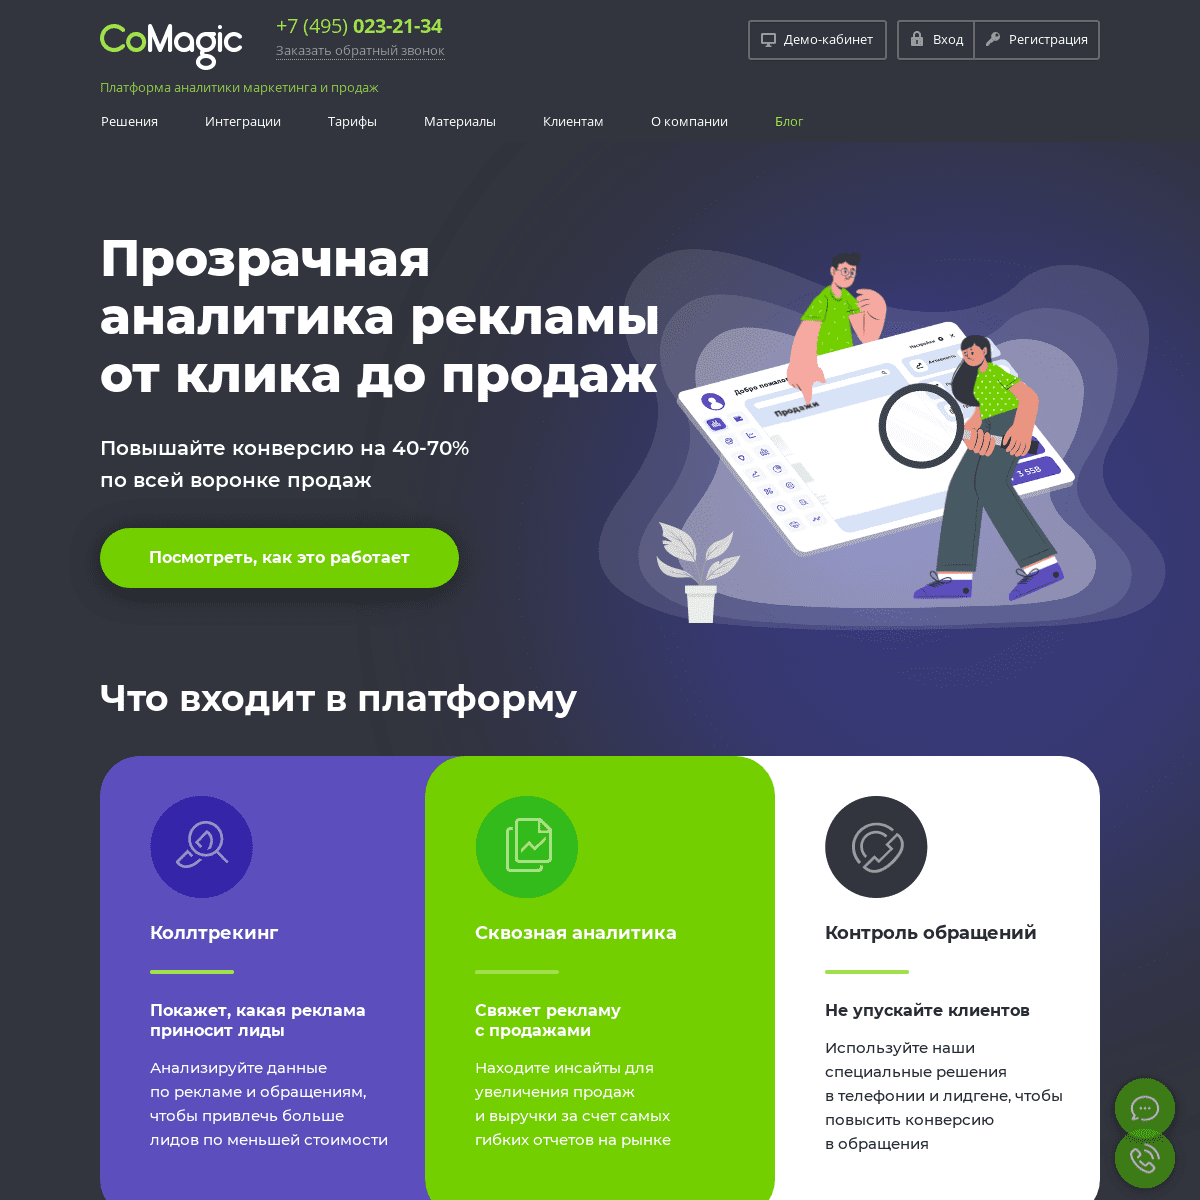 A complete backup of https://comagic.ru